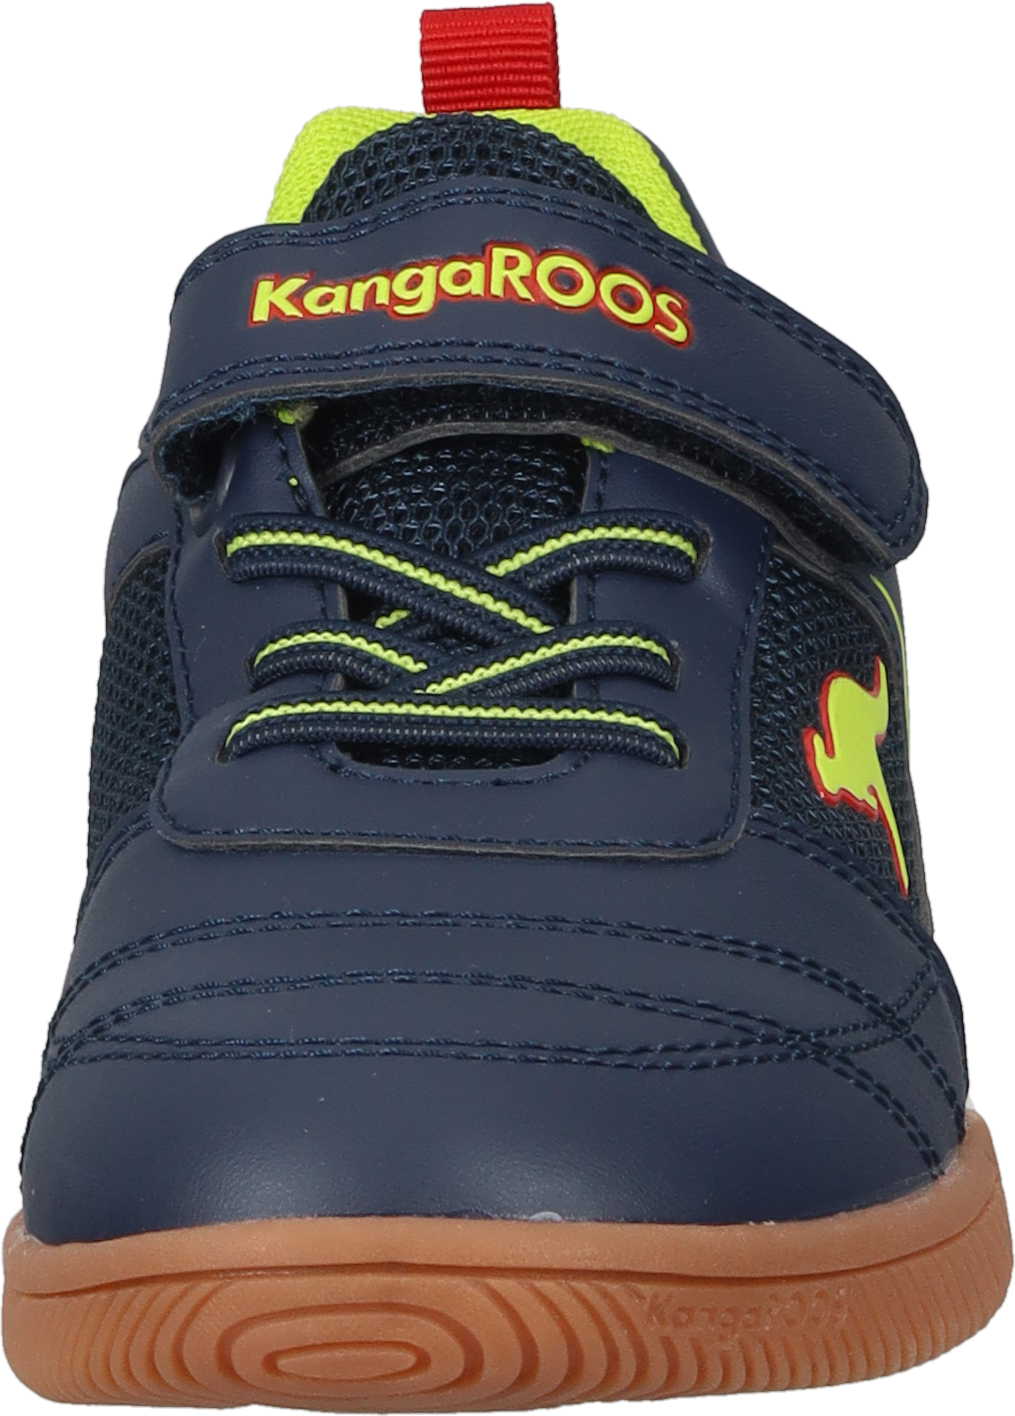 K5-Play EV KangaROOS Sneaker